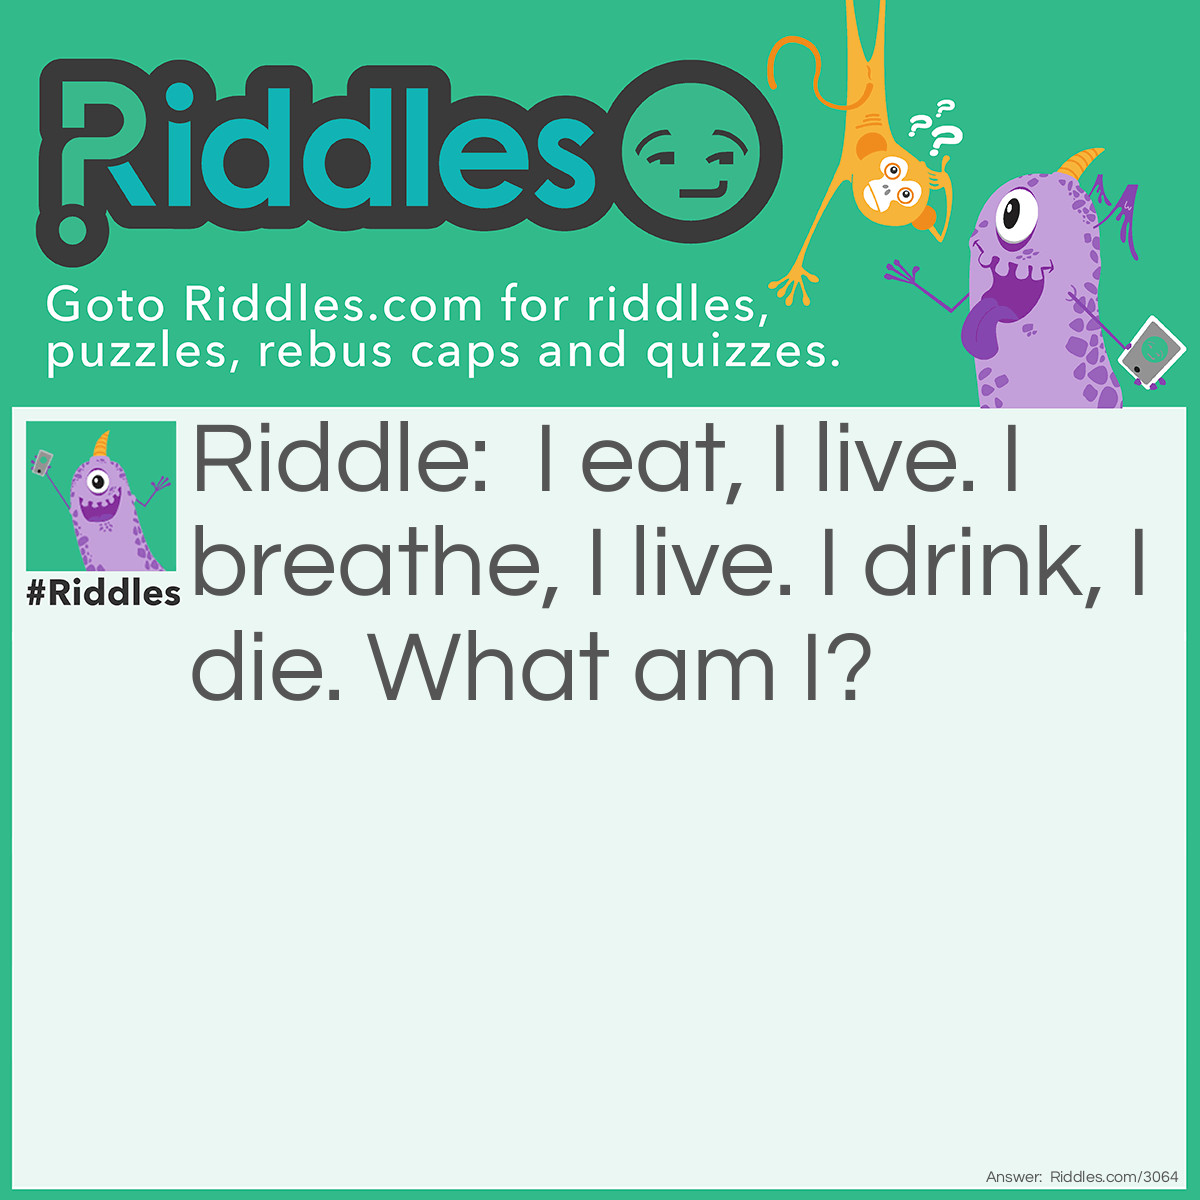 Riddle: I eat, I live. I breathe, I live. I drink, I die. What am I? Answer: Fire